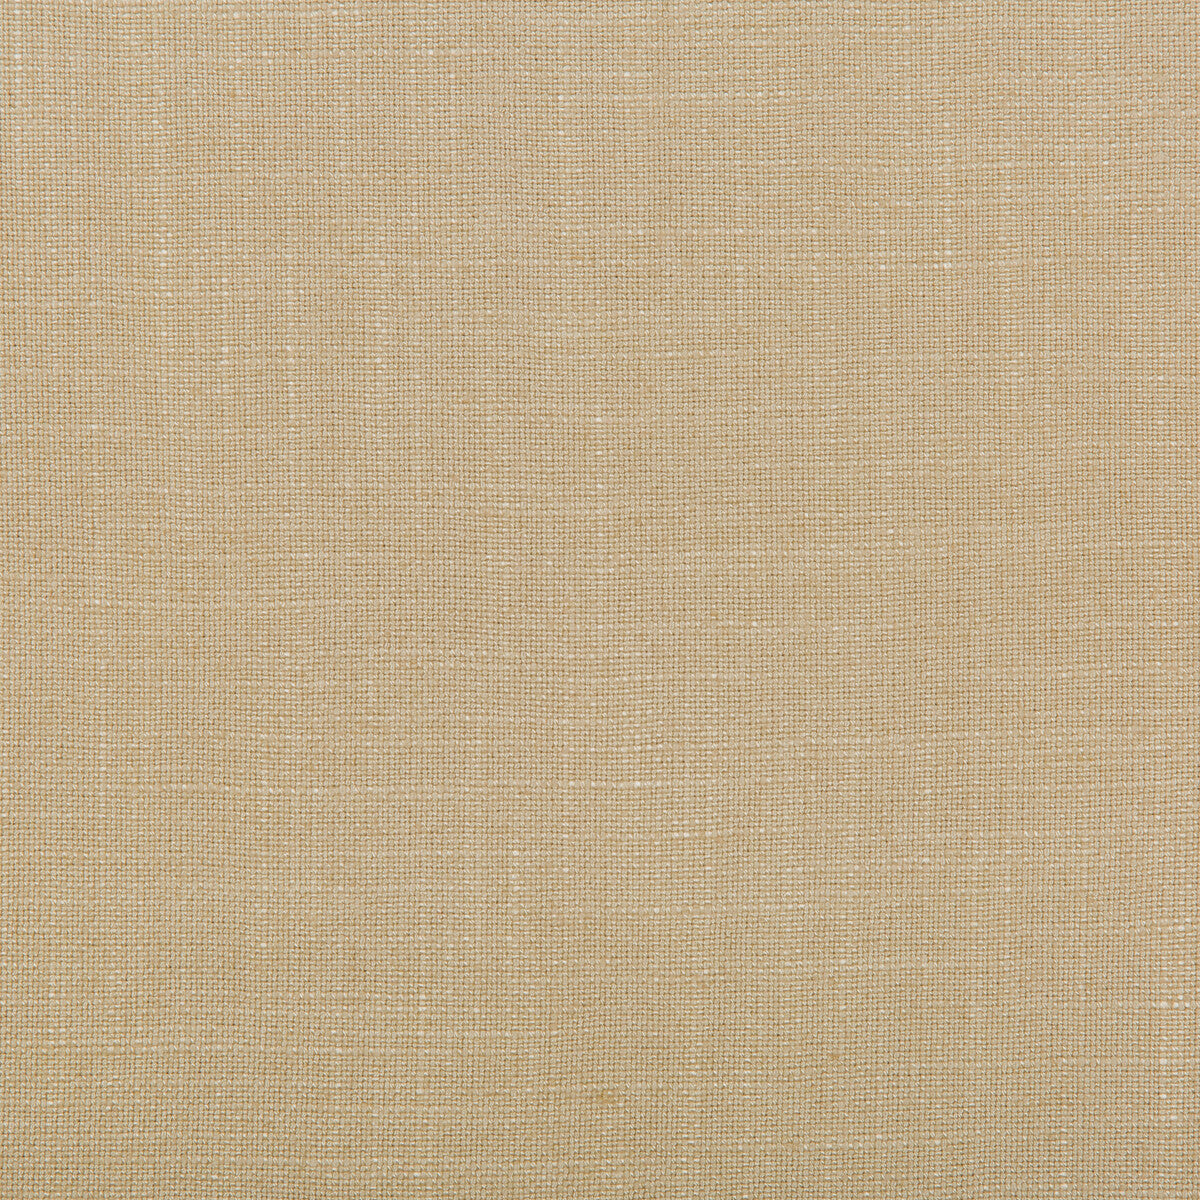 Aura fabric in sand color - pattern 35520.1616.0 - by Kravet Design